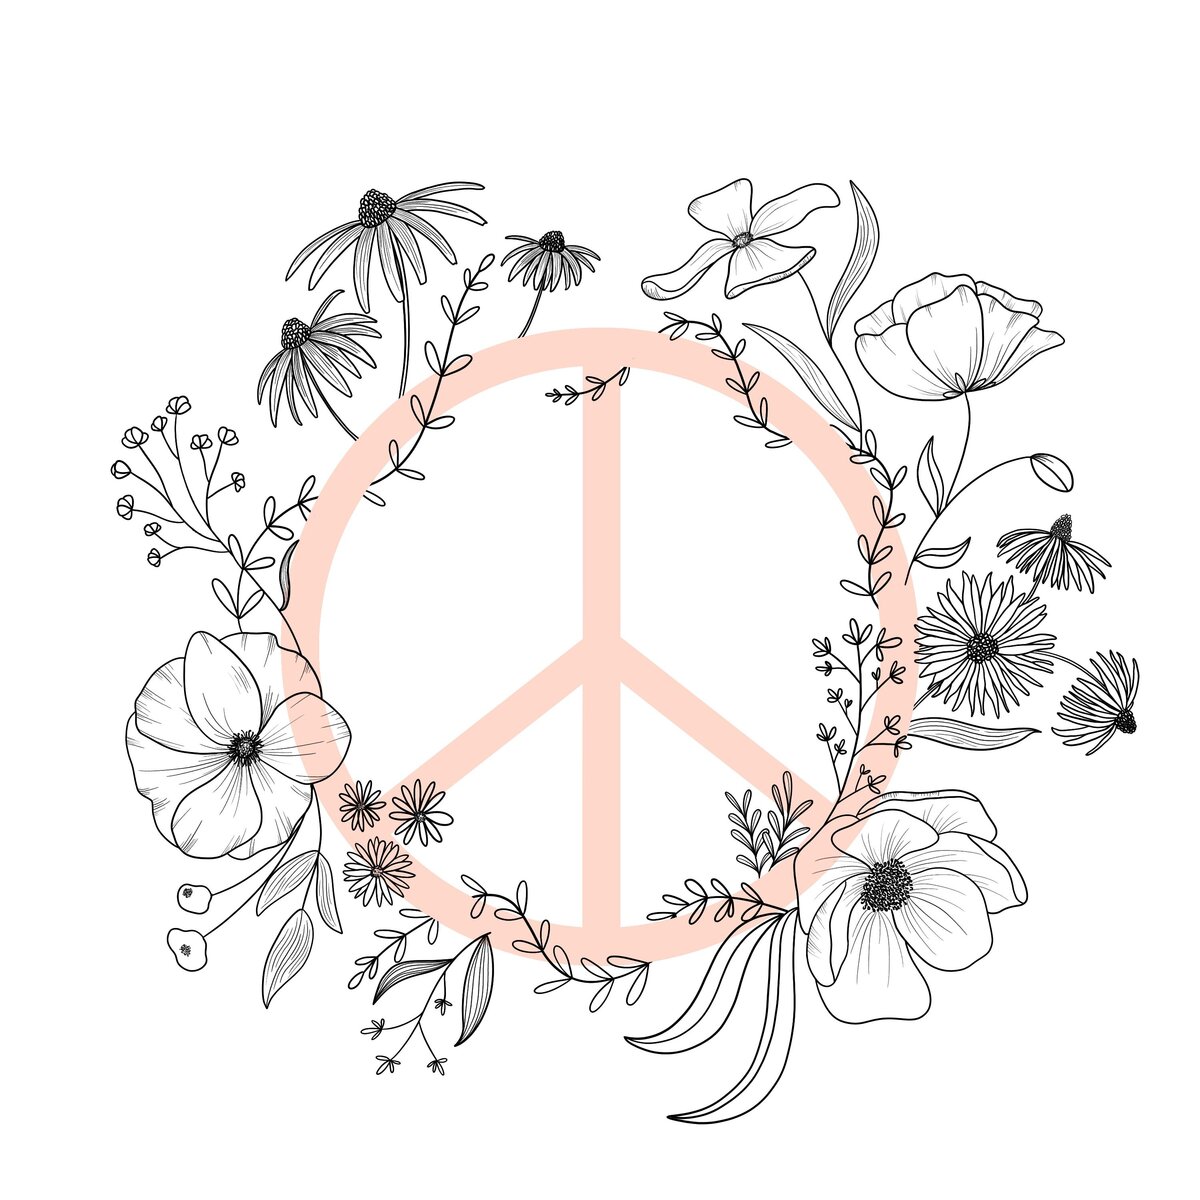 Wildflower_Peace copy